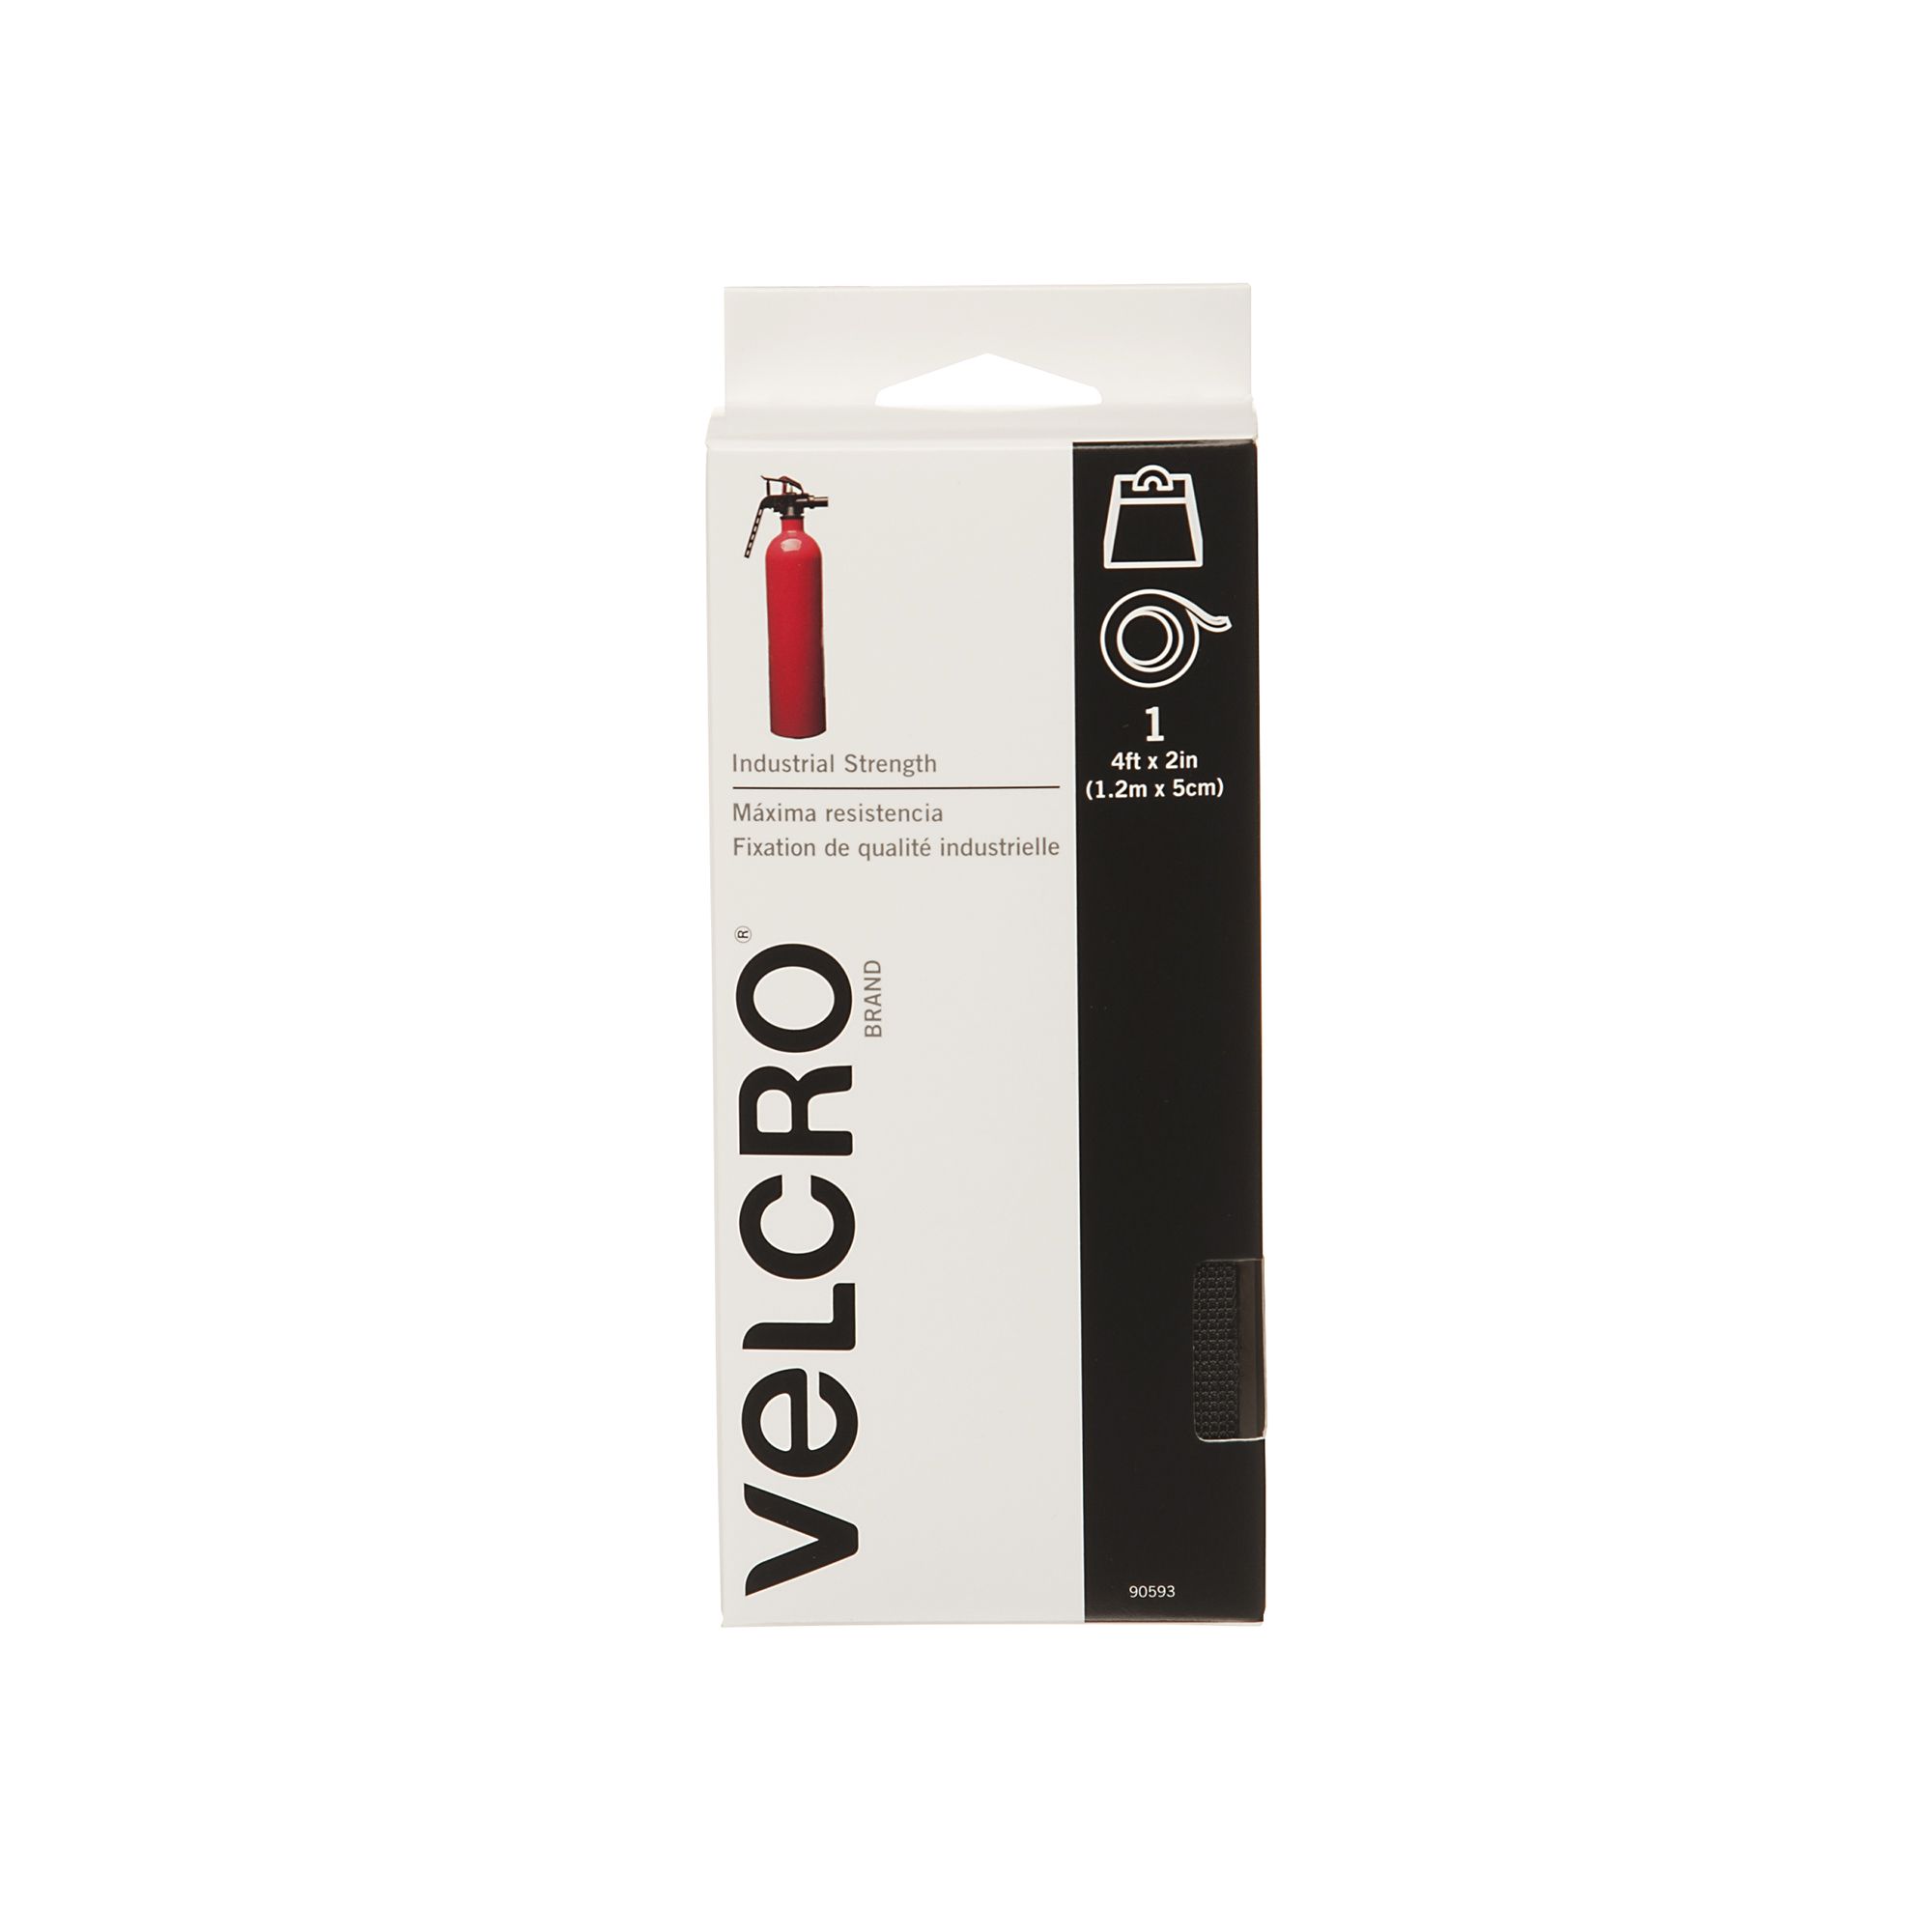 Velcro Industrial-Strength Heavy-Duty Fasteners, 2 x 49 ft, Black (30636)